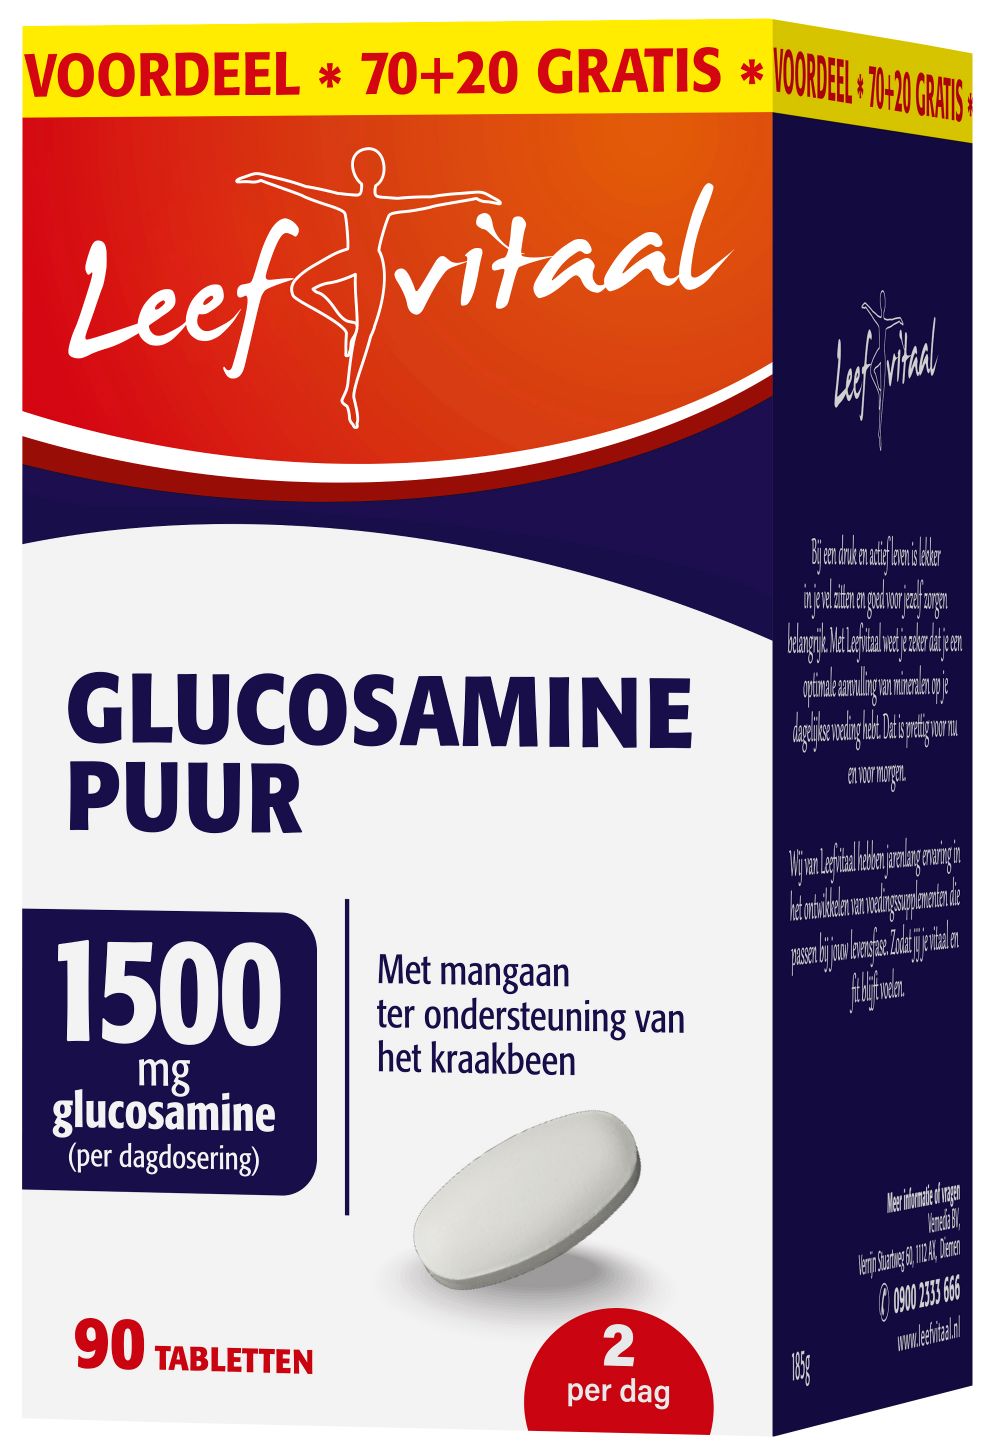 nieuws Aap Helder op Glucosamine puur - Leefvitaal